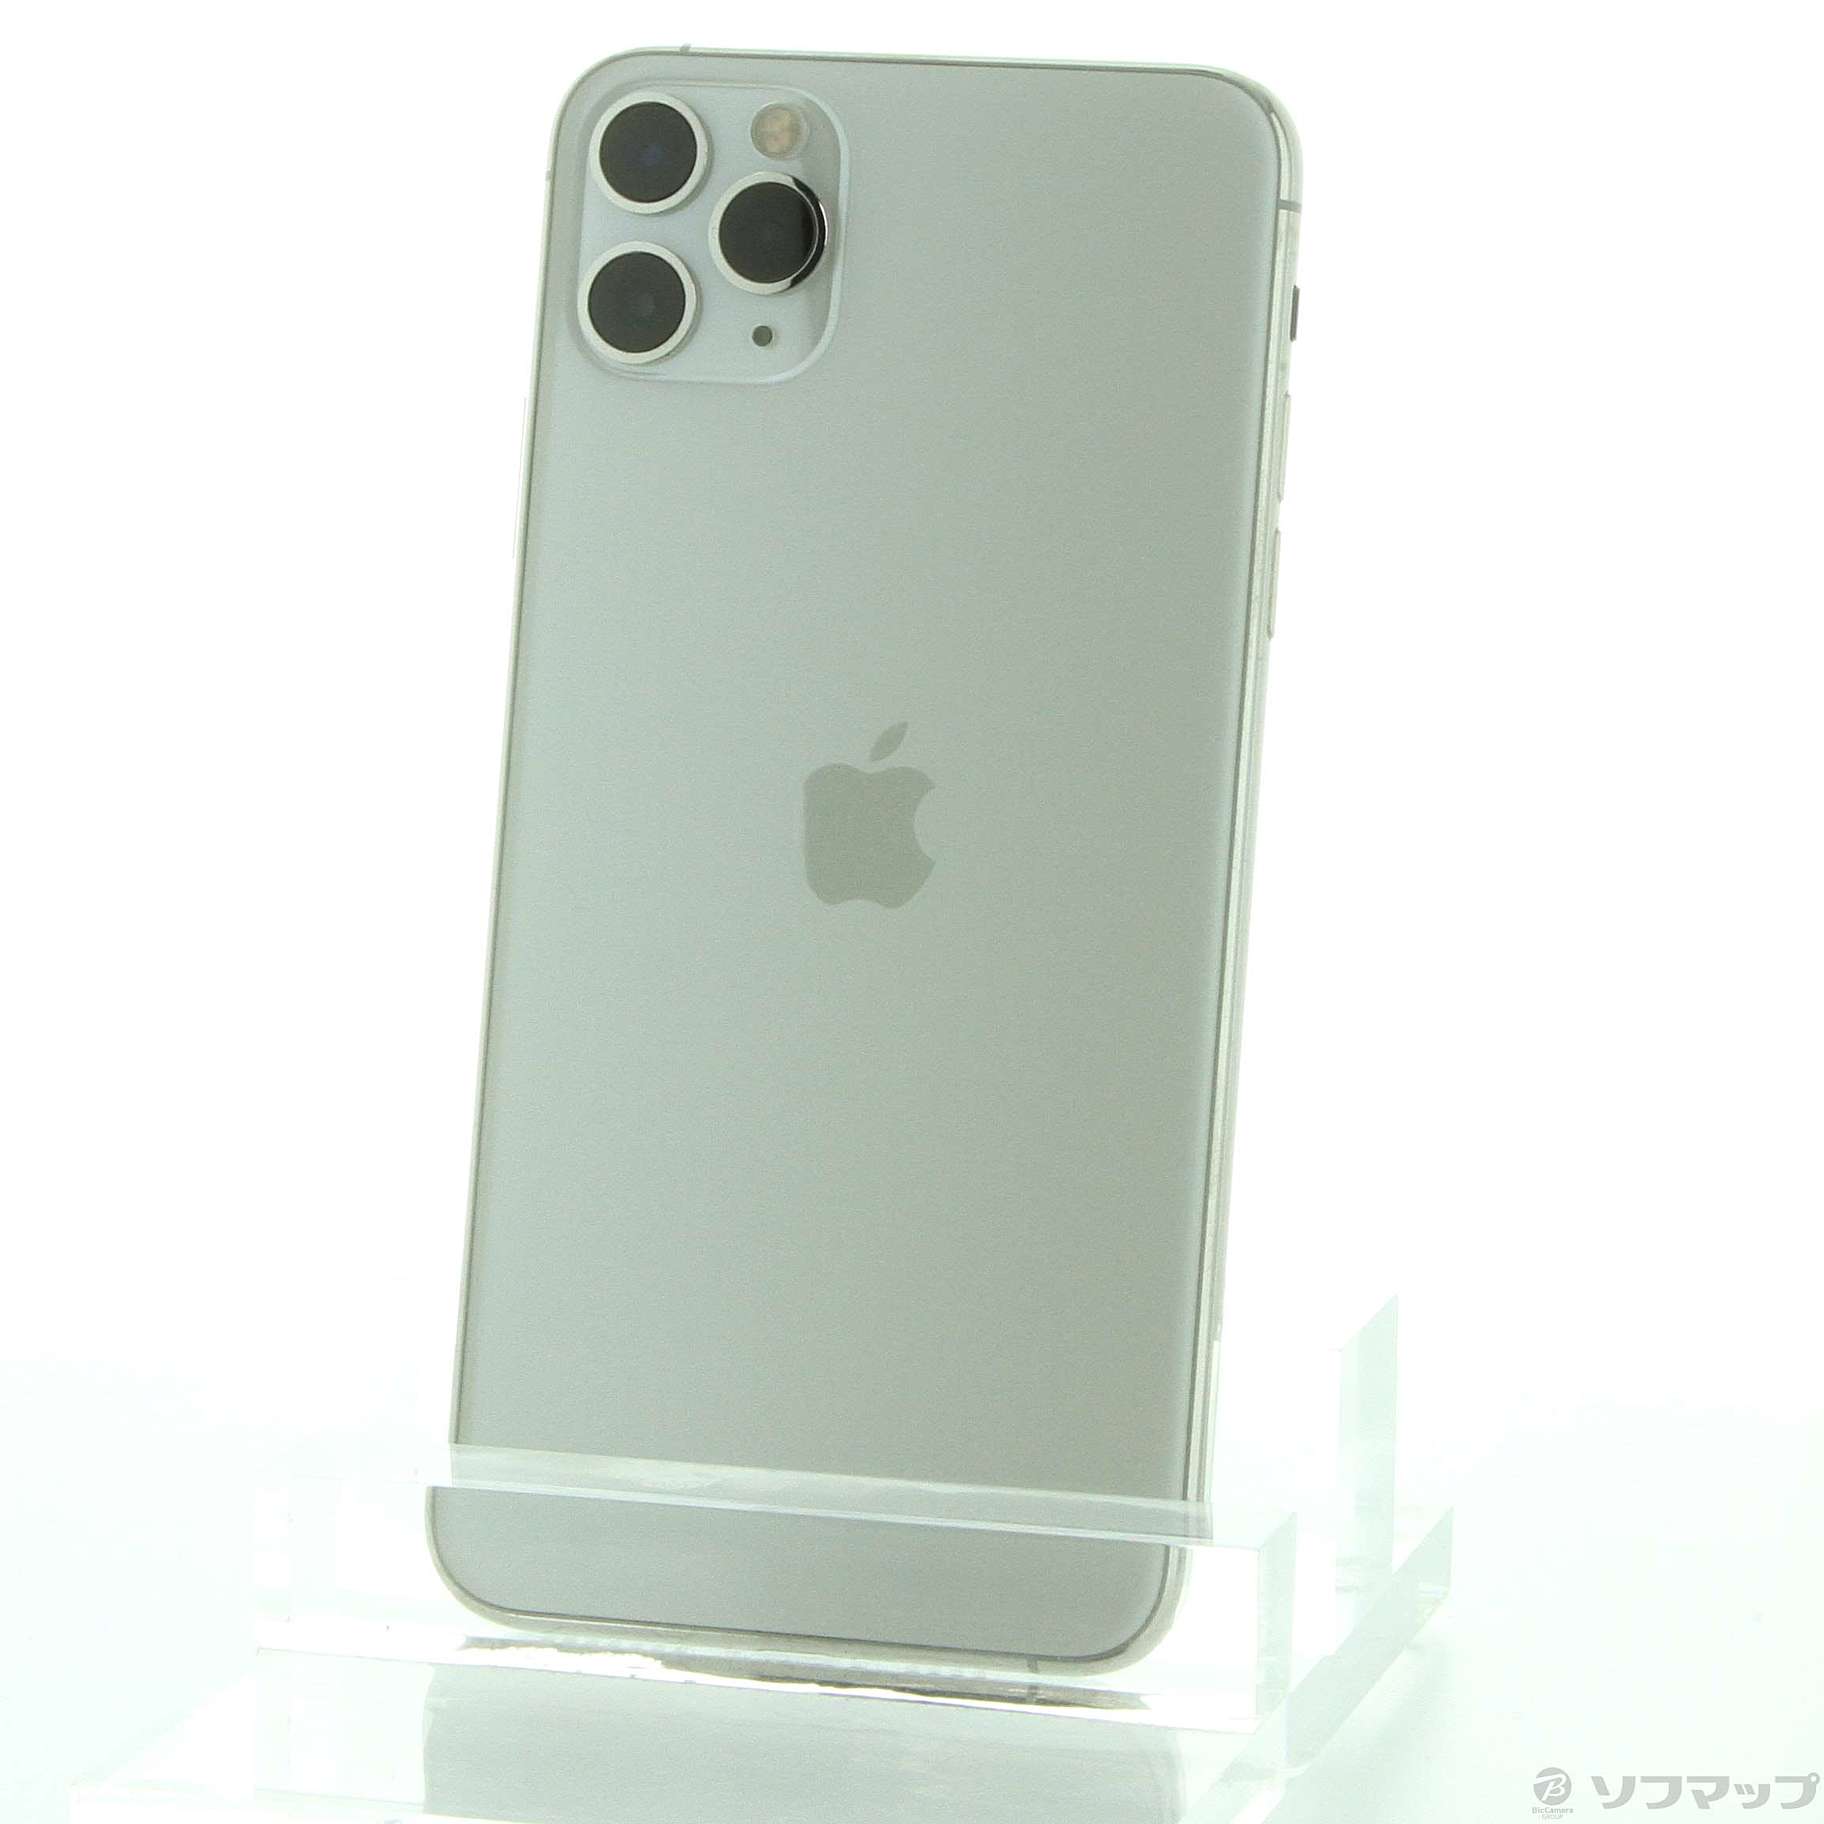 iPhone 11 Pro Max シルバー 256 GB Softbank商品の状態目立った傷や汚れなし